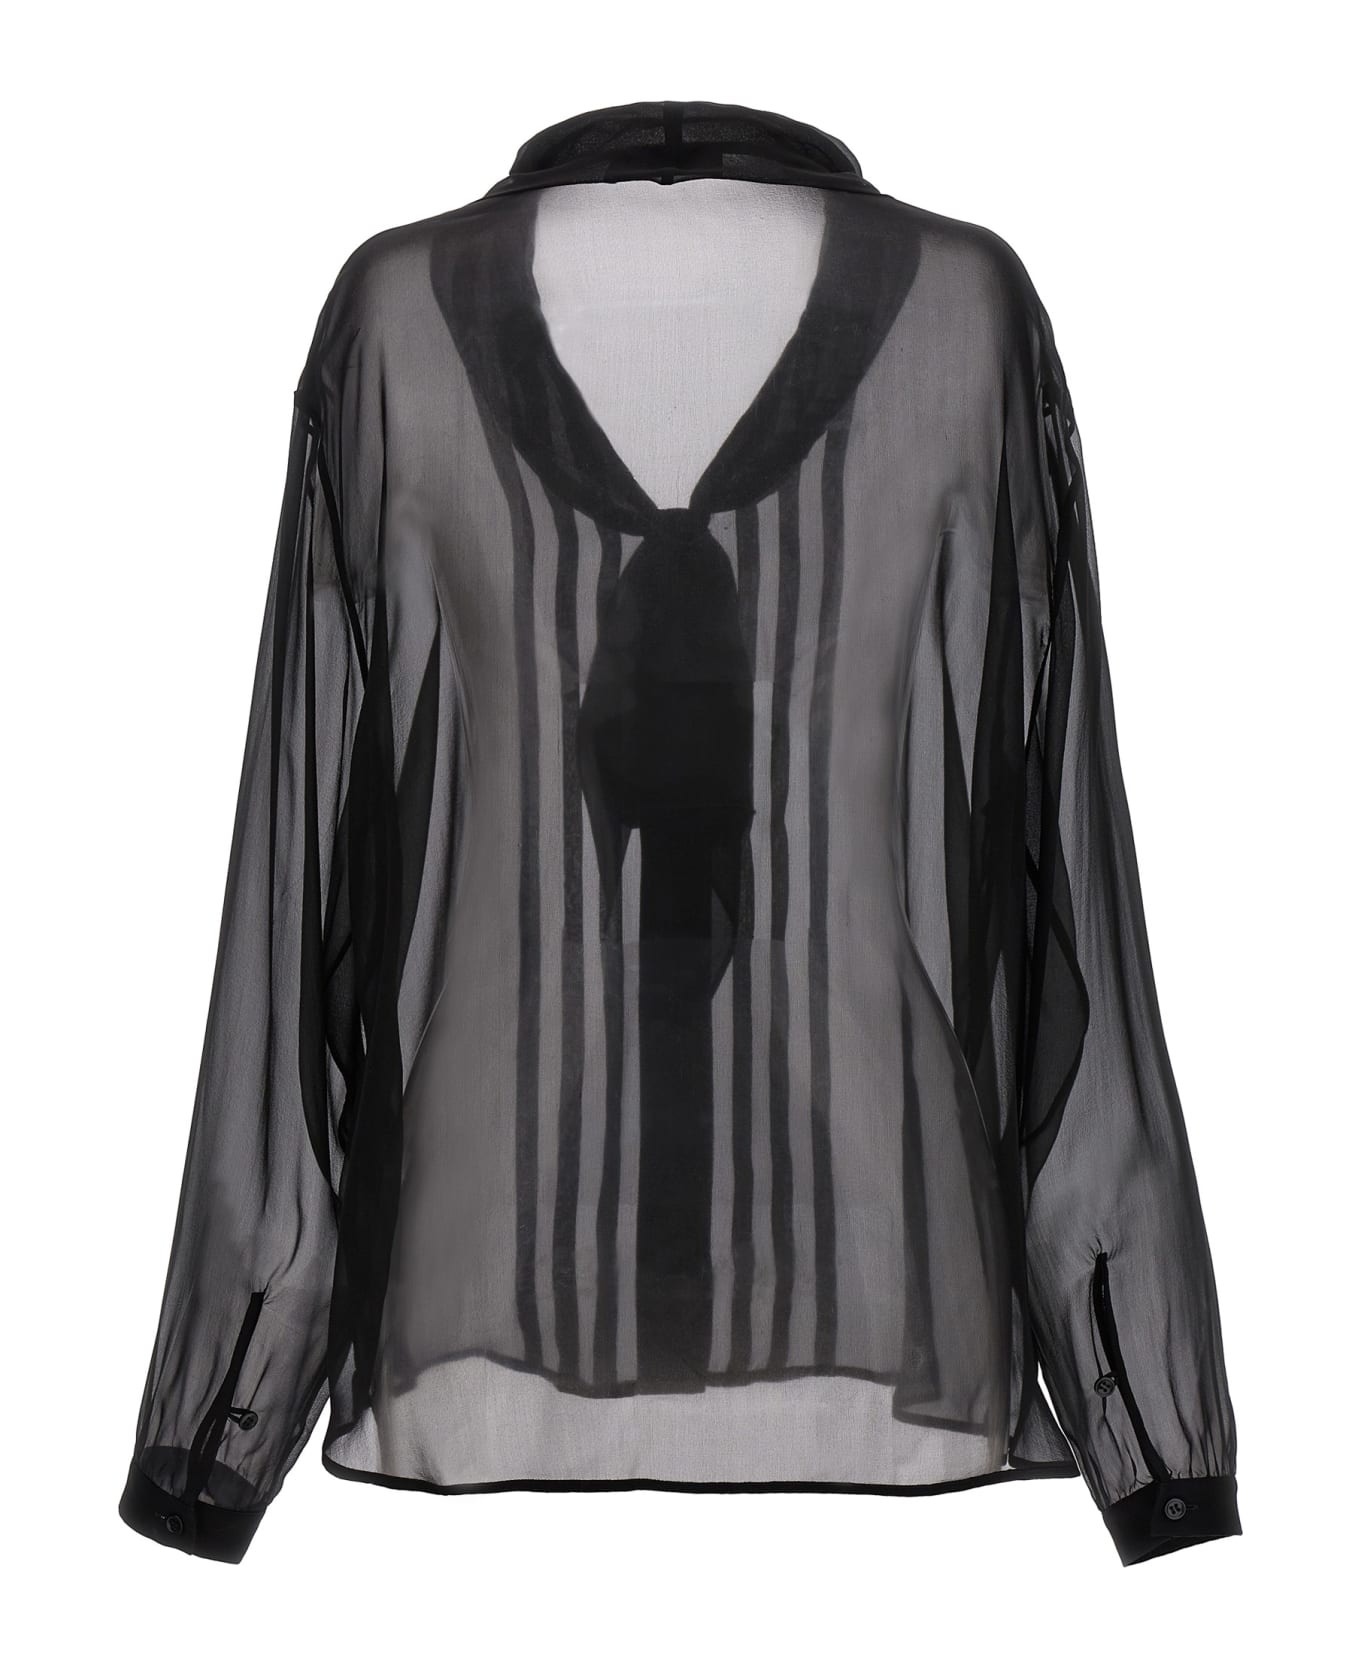 Saint Laurent Transparent Muslin Shirt - Black